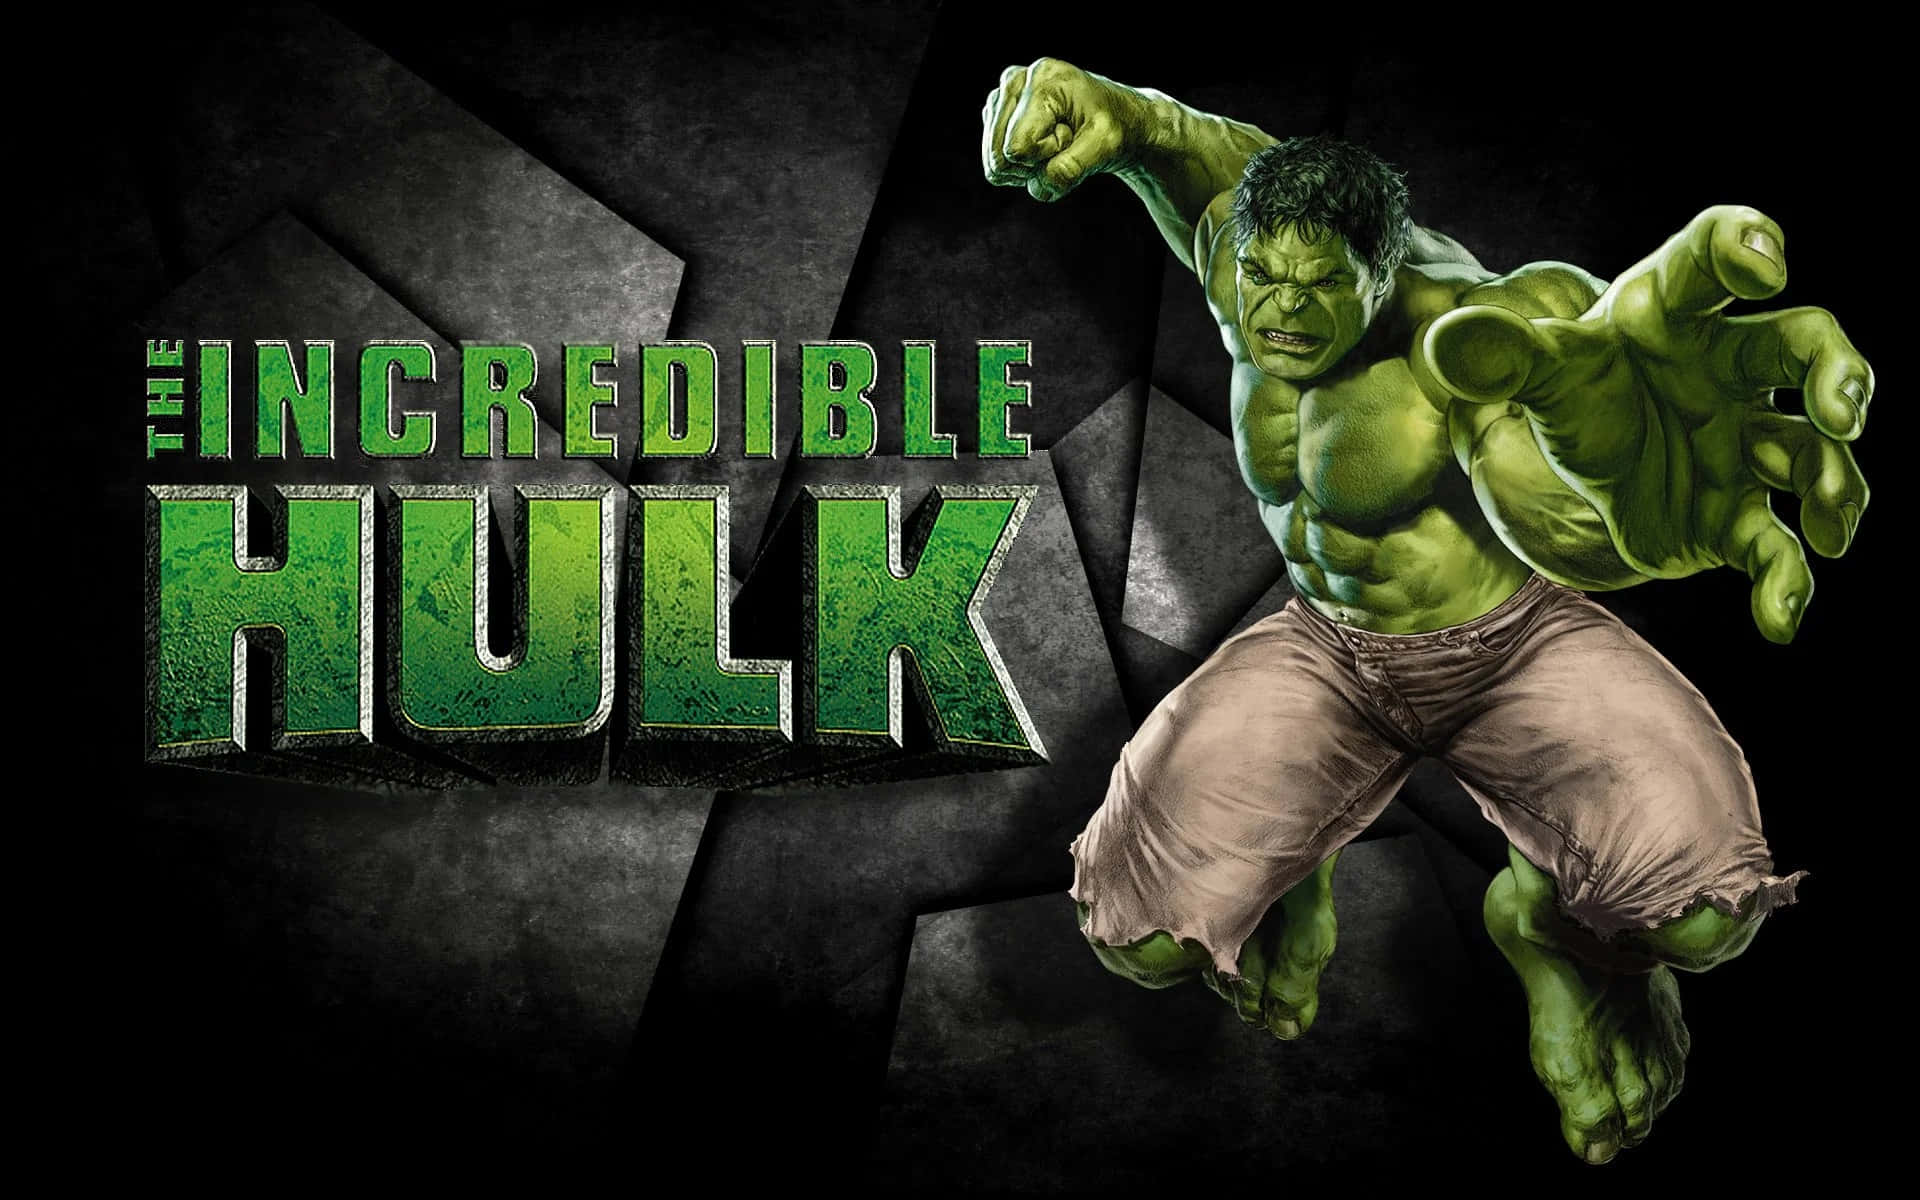 "The Stronger the Hulk, the Stronger the World"